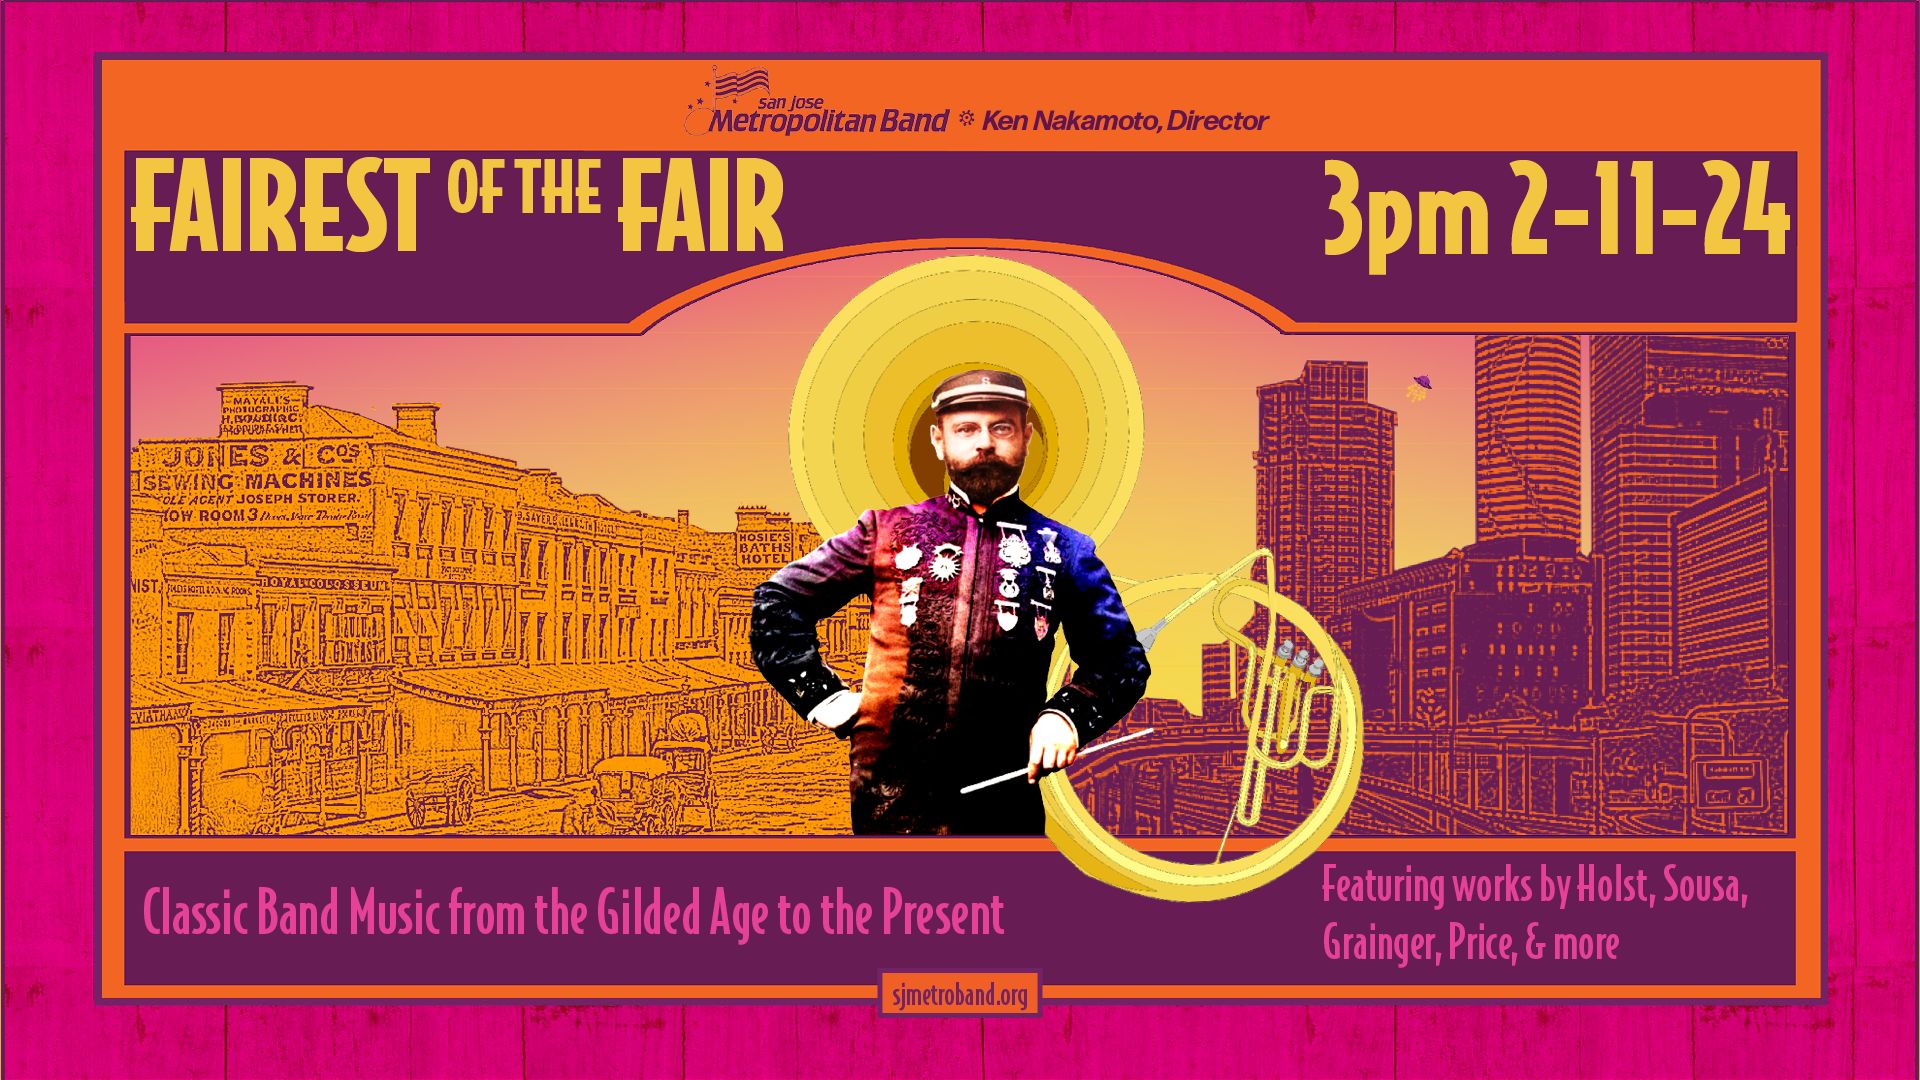 San Jose Metropolitan Band presents Fairest of the Fair, San Jose, California, United States